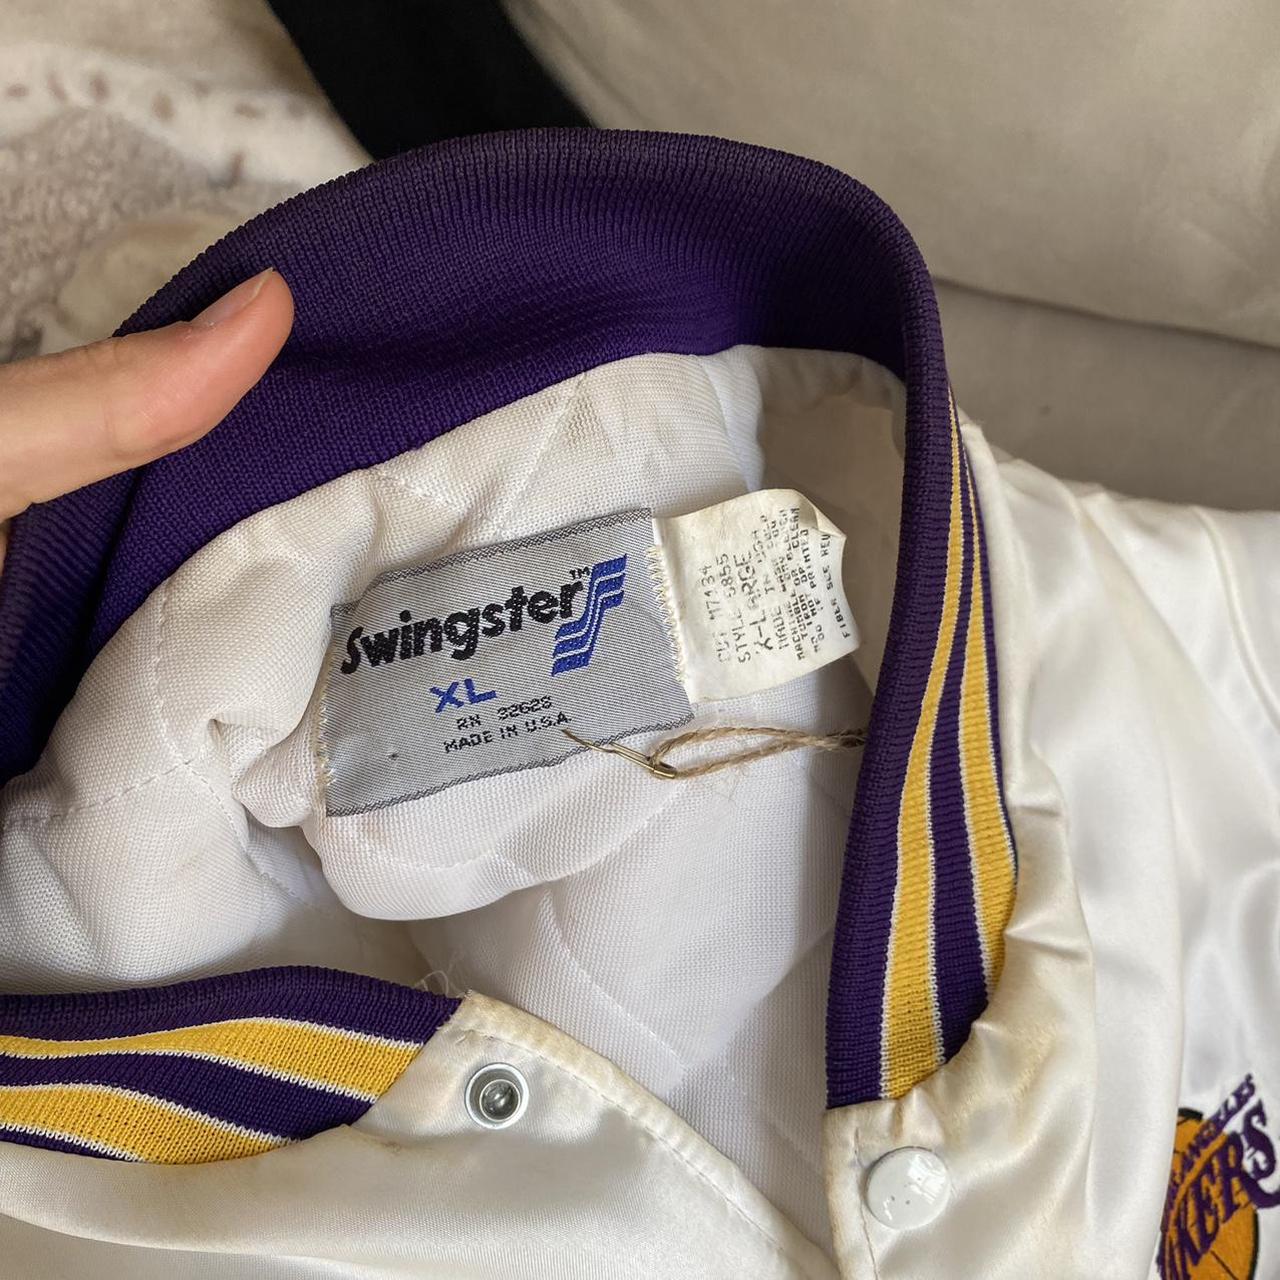 Vintage Lakers Athletic Letterman Jacket Size Large - Depop